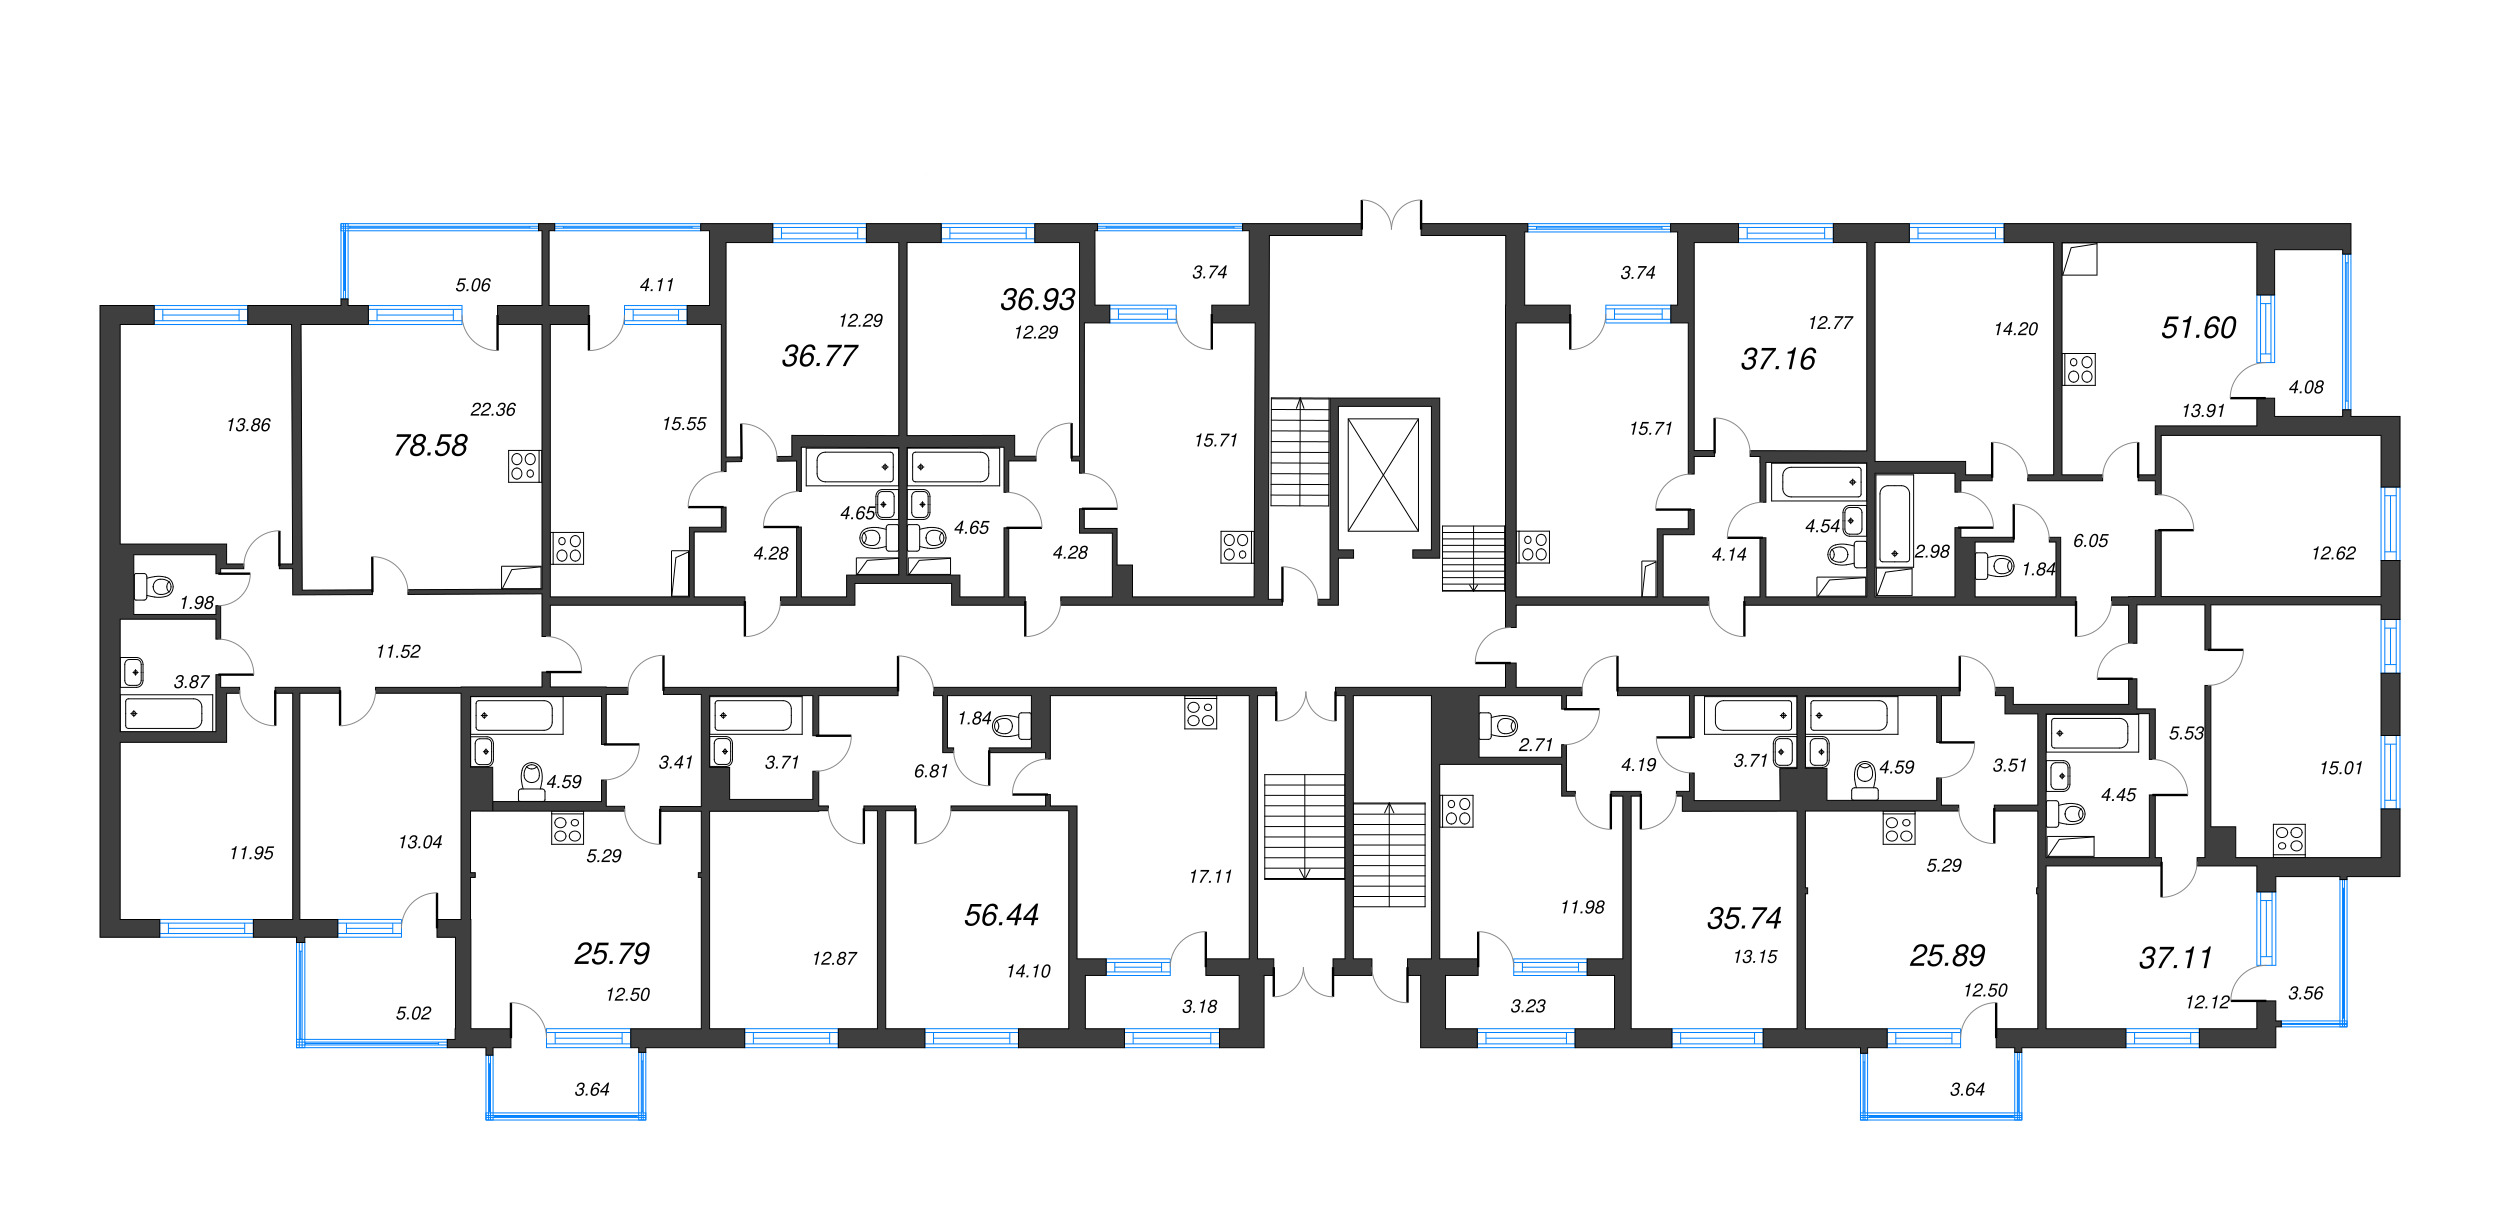 2-комнатная (Евро) квартира, 37.11 м² - планировка этажа